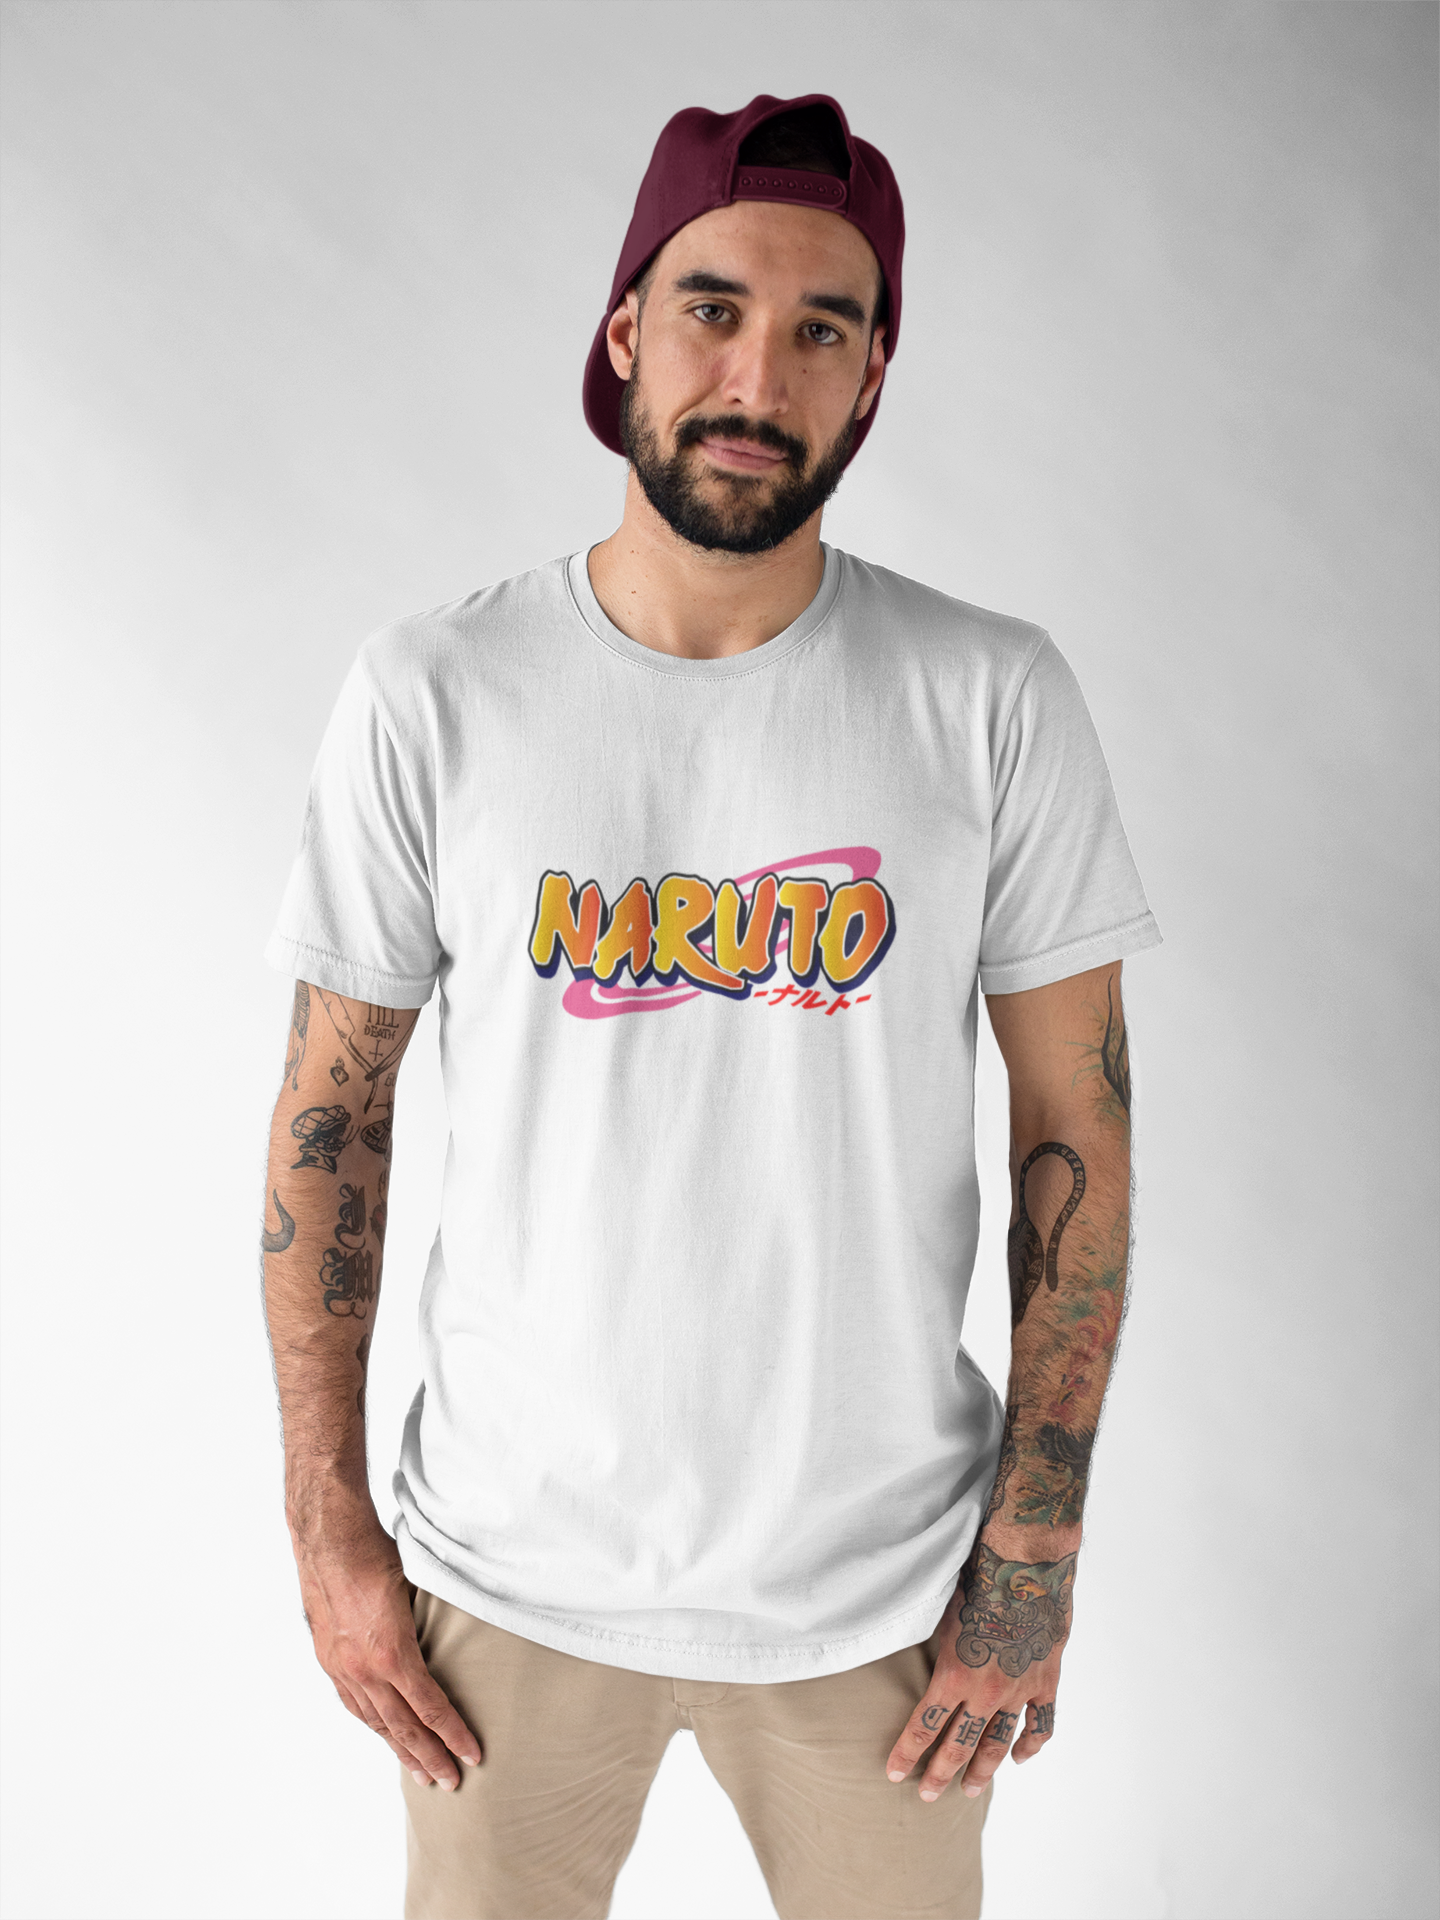 naruto t shirt amazon india | the unrealm